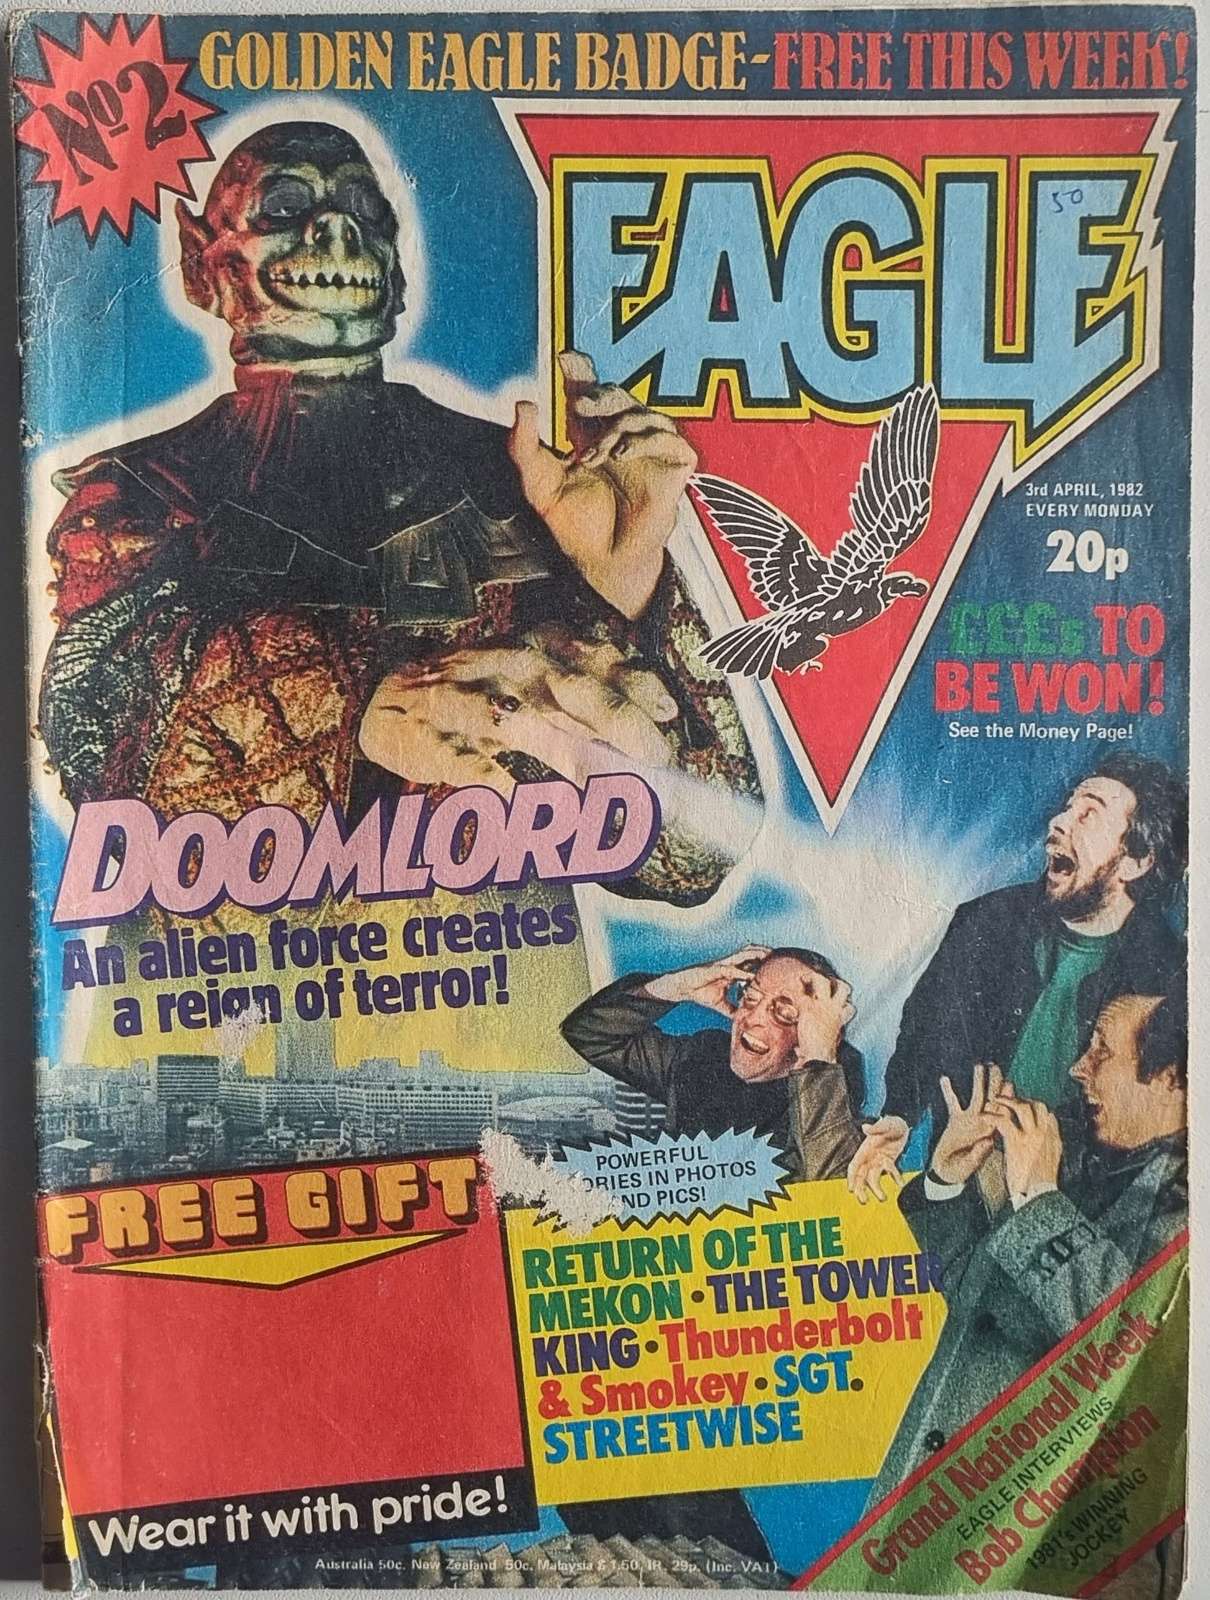 Eagle - No 2 - Monday 3rd April 1982